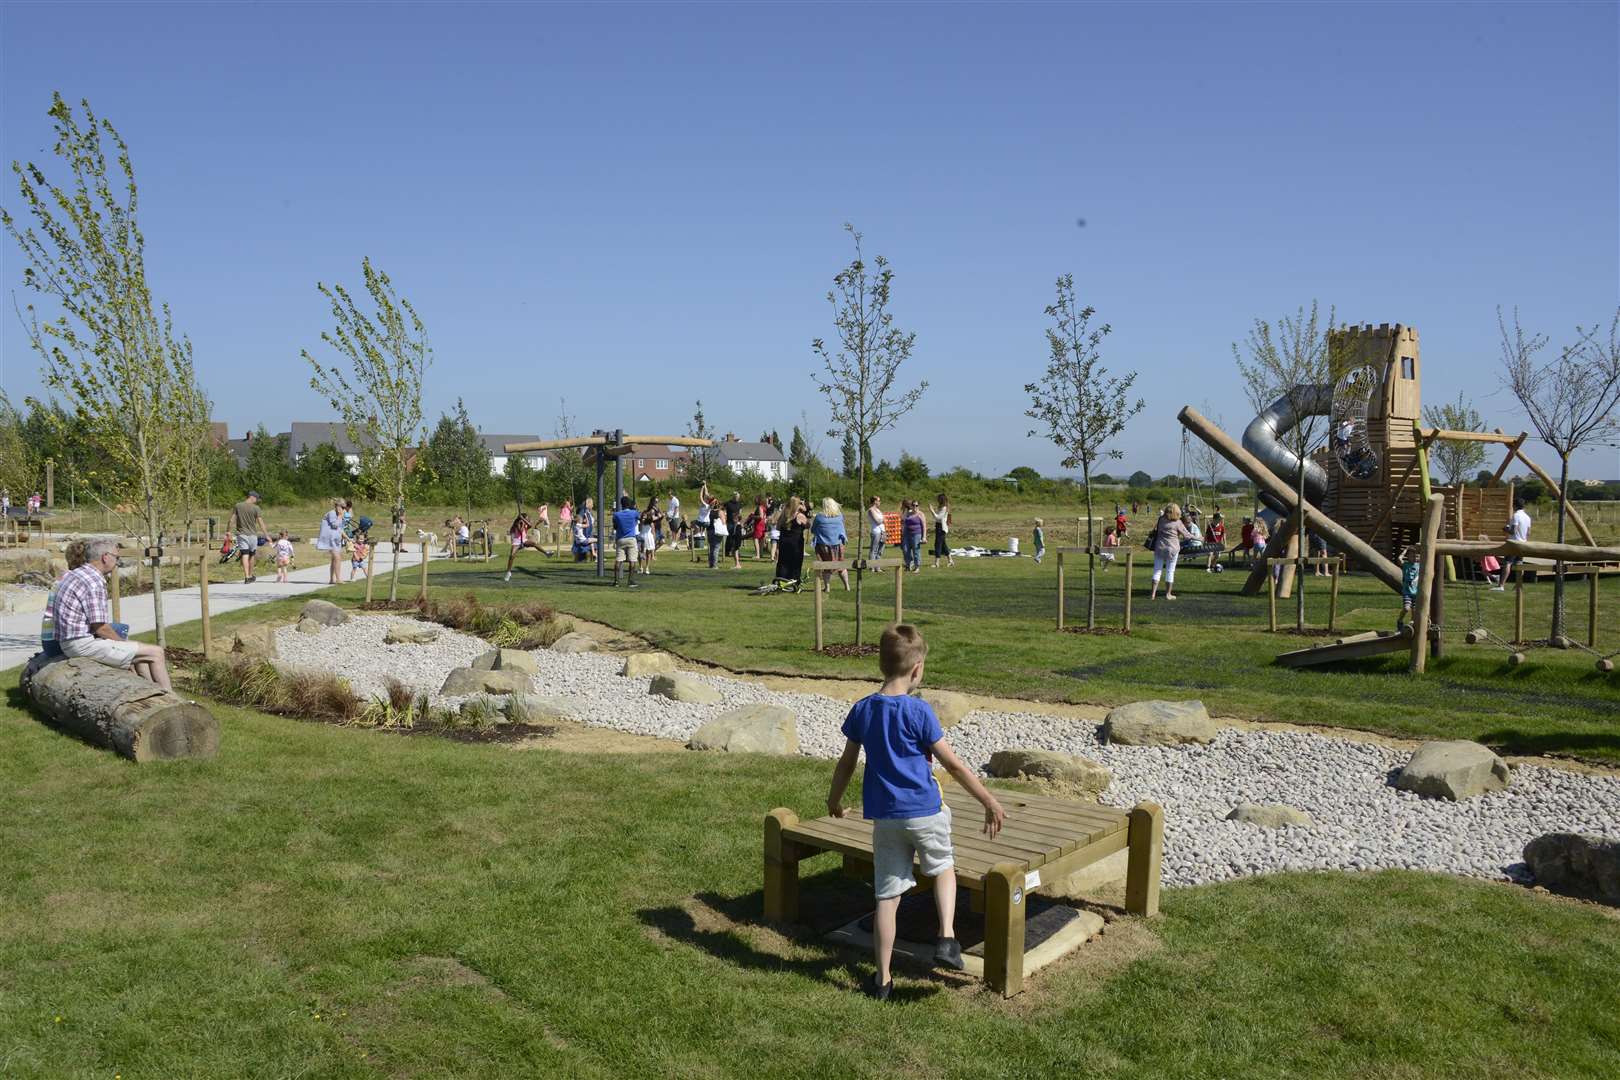 Bridgefield Park and play area